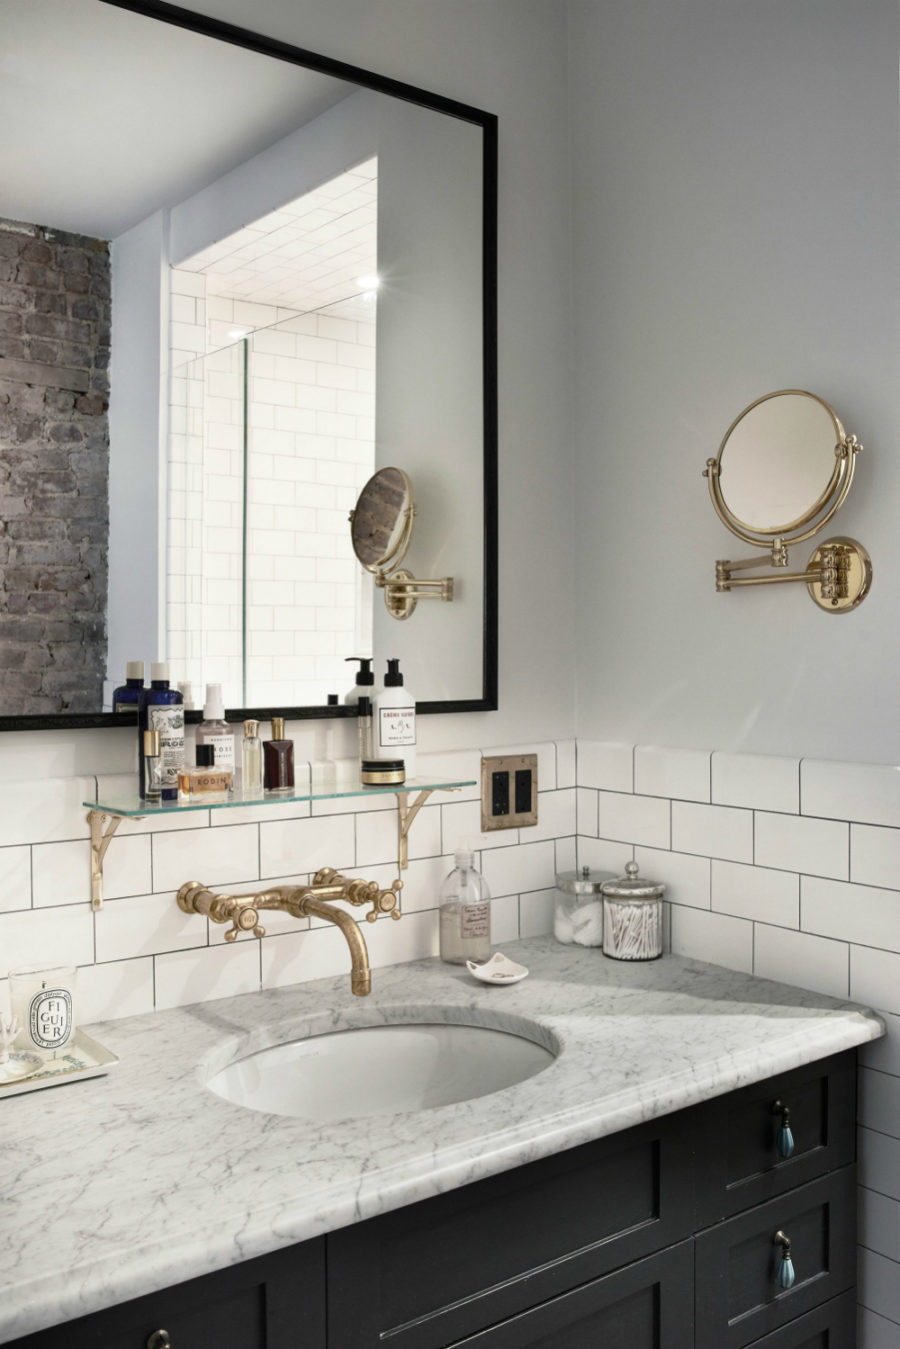 Big Bathroom Mirror Trend in Real Interiors